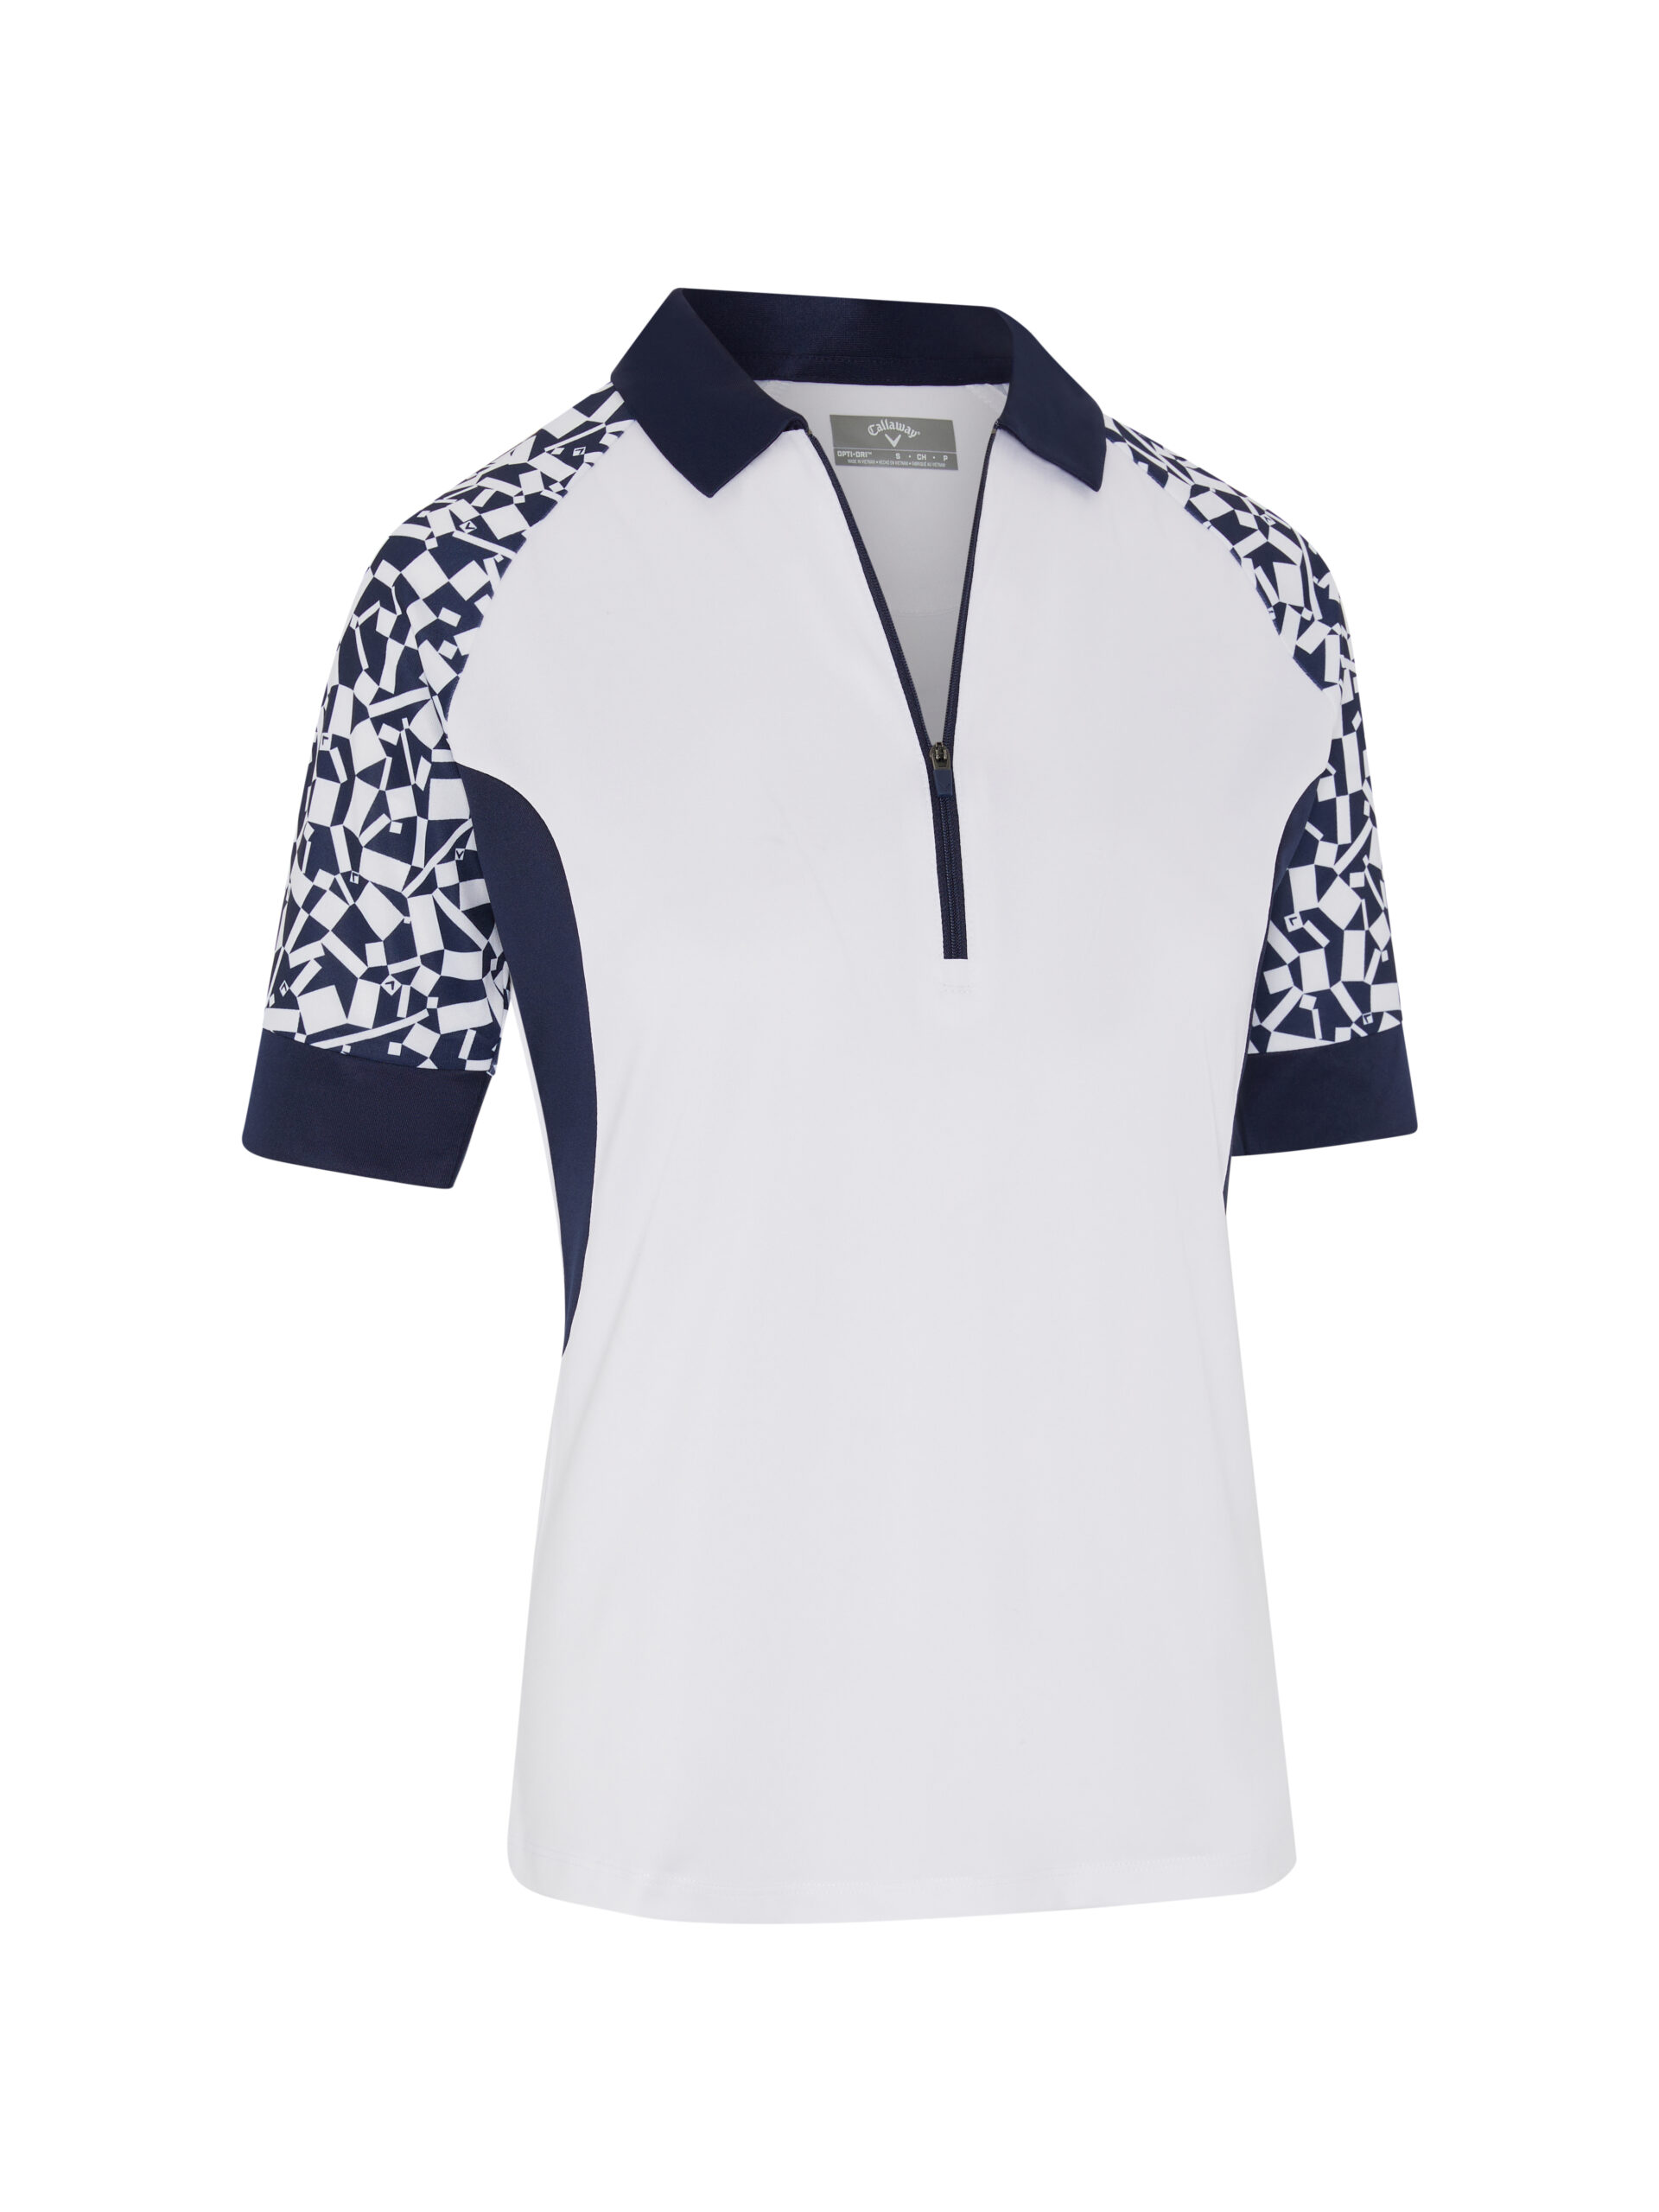 Callaway Two-Tone Geo dámské golfové triko, bílé, vel. XL